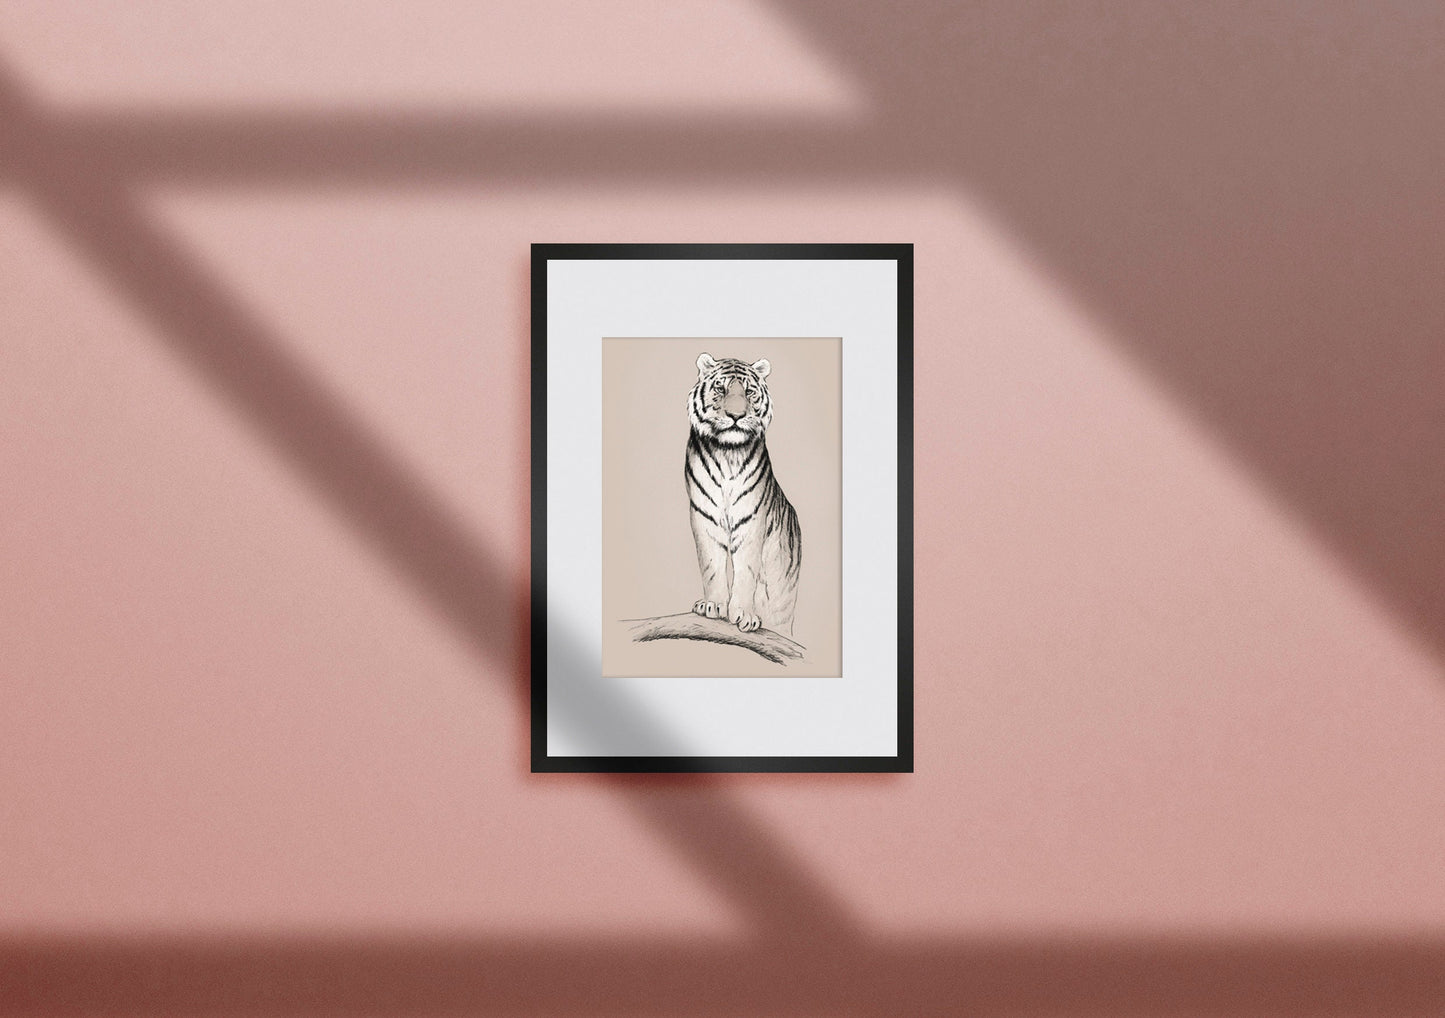 'Tiger' giclee print. Unframed